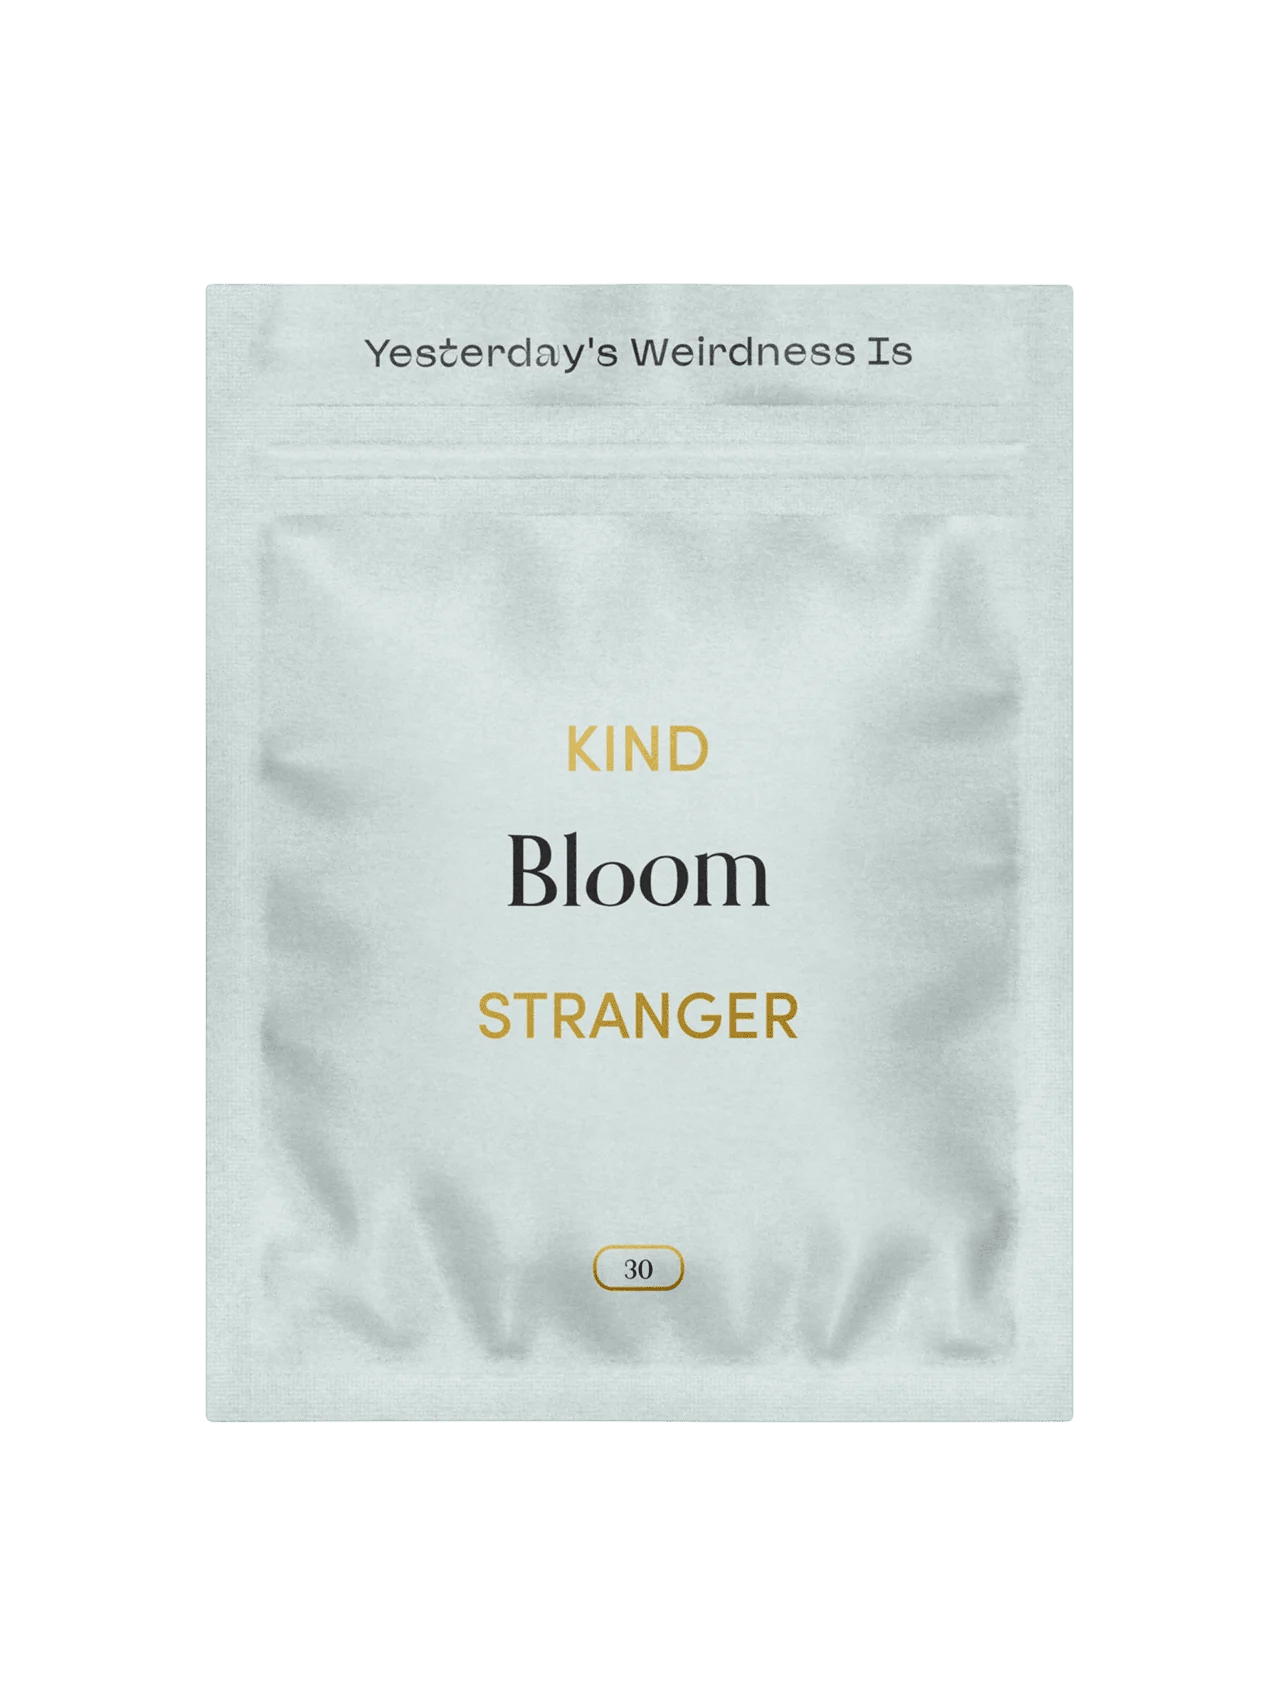 Kind Sranger - Microdose Capsules - Bloom